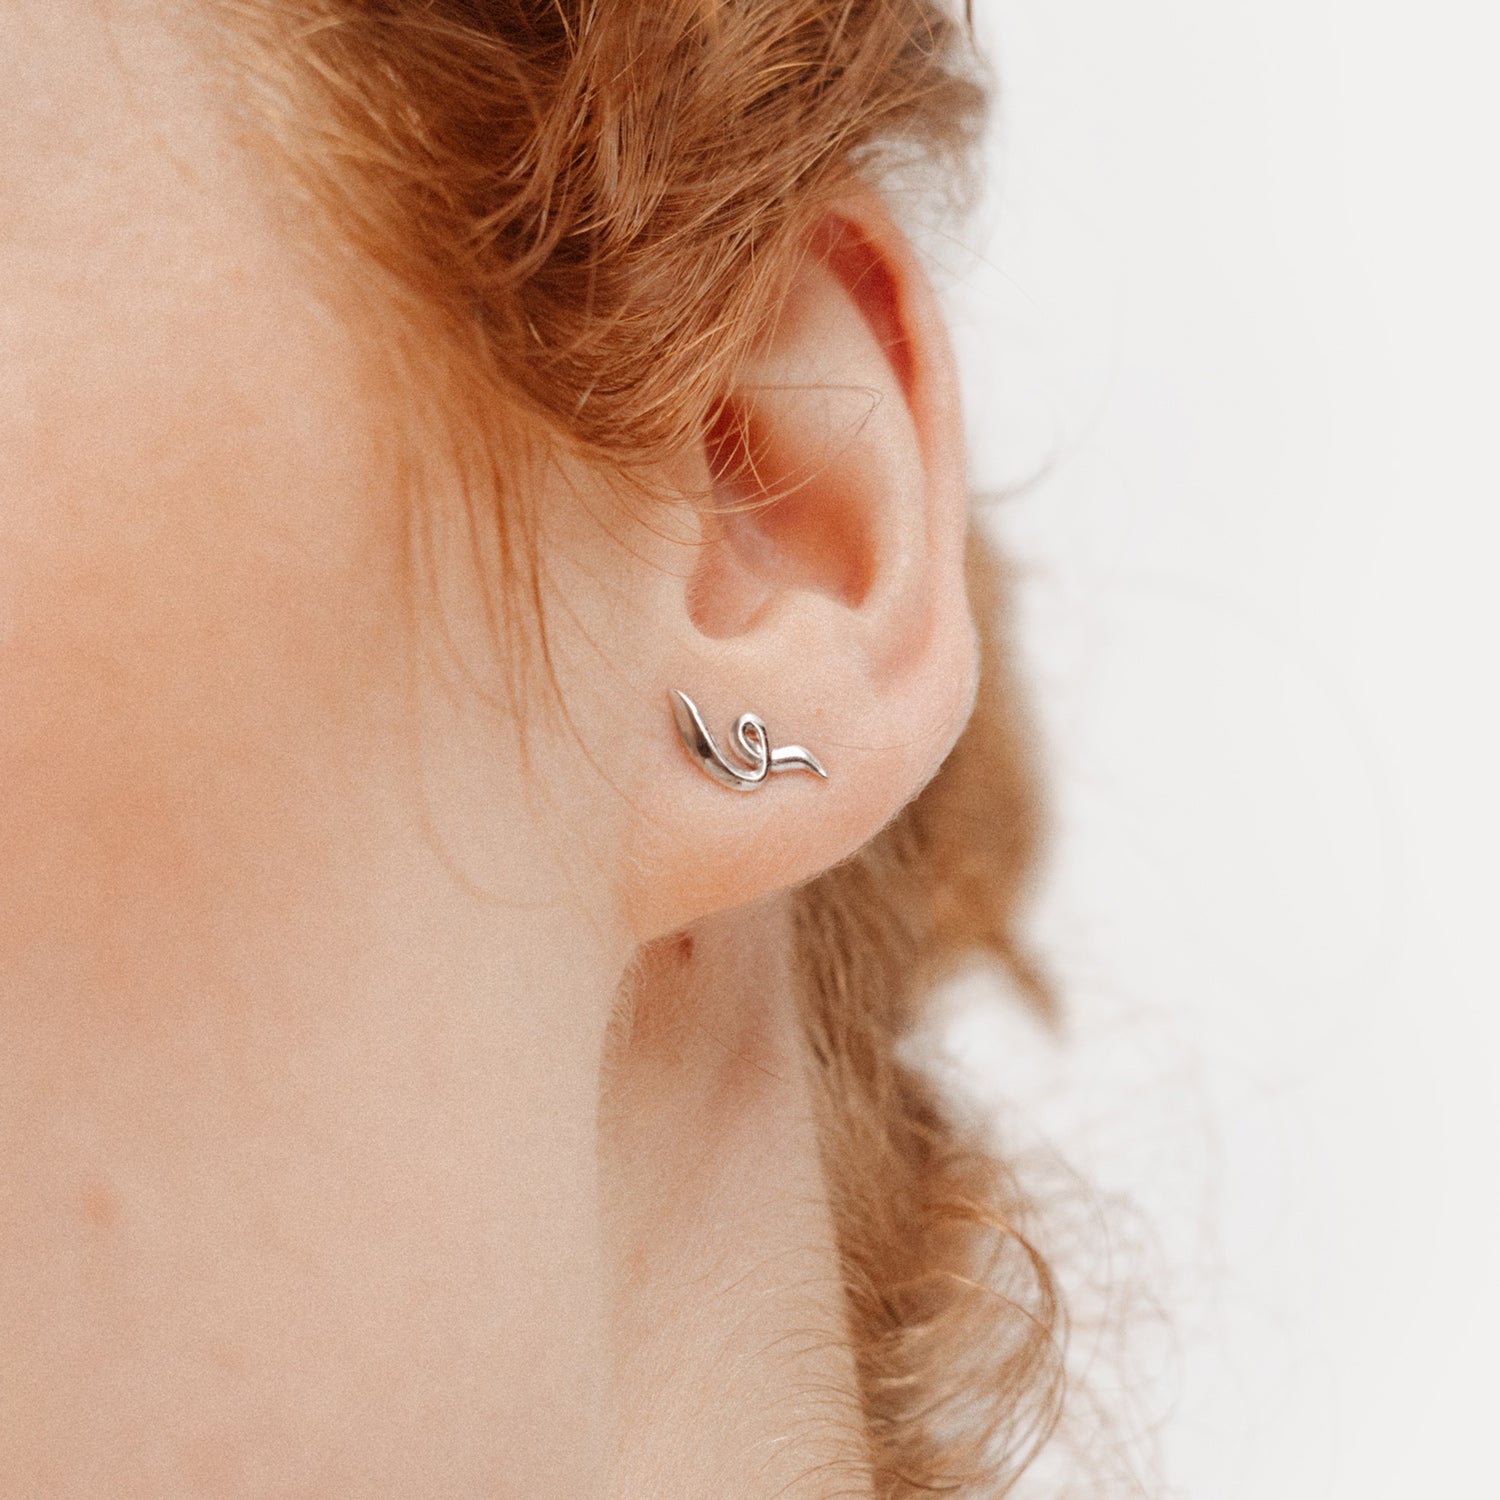 Poise Twirl Stud Earrings, recycled Sterling Silver, shown on ear - VEYIA Berlin